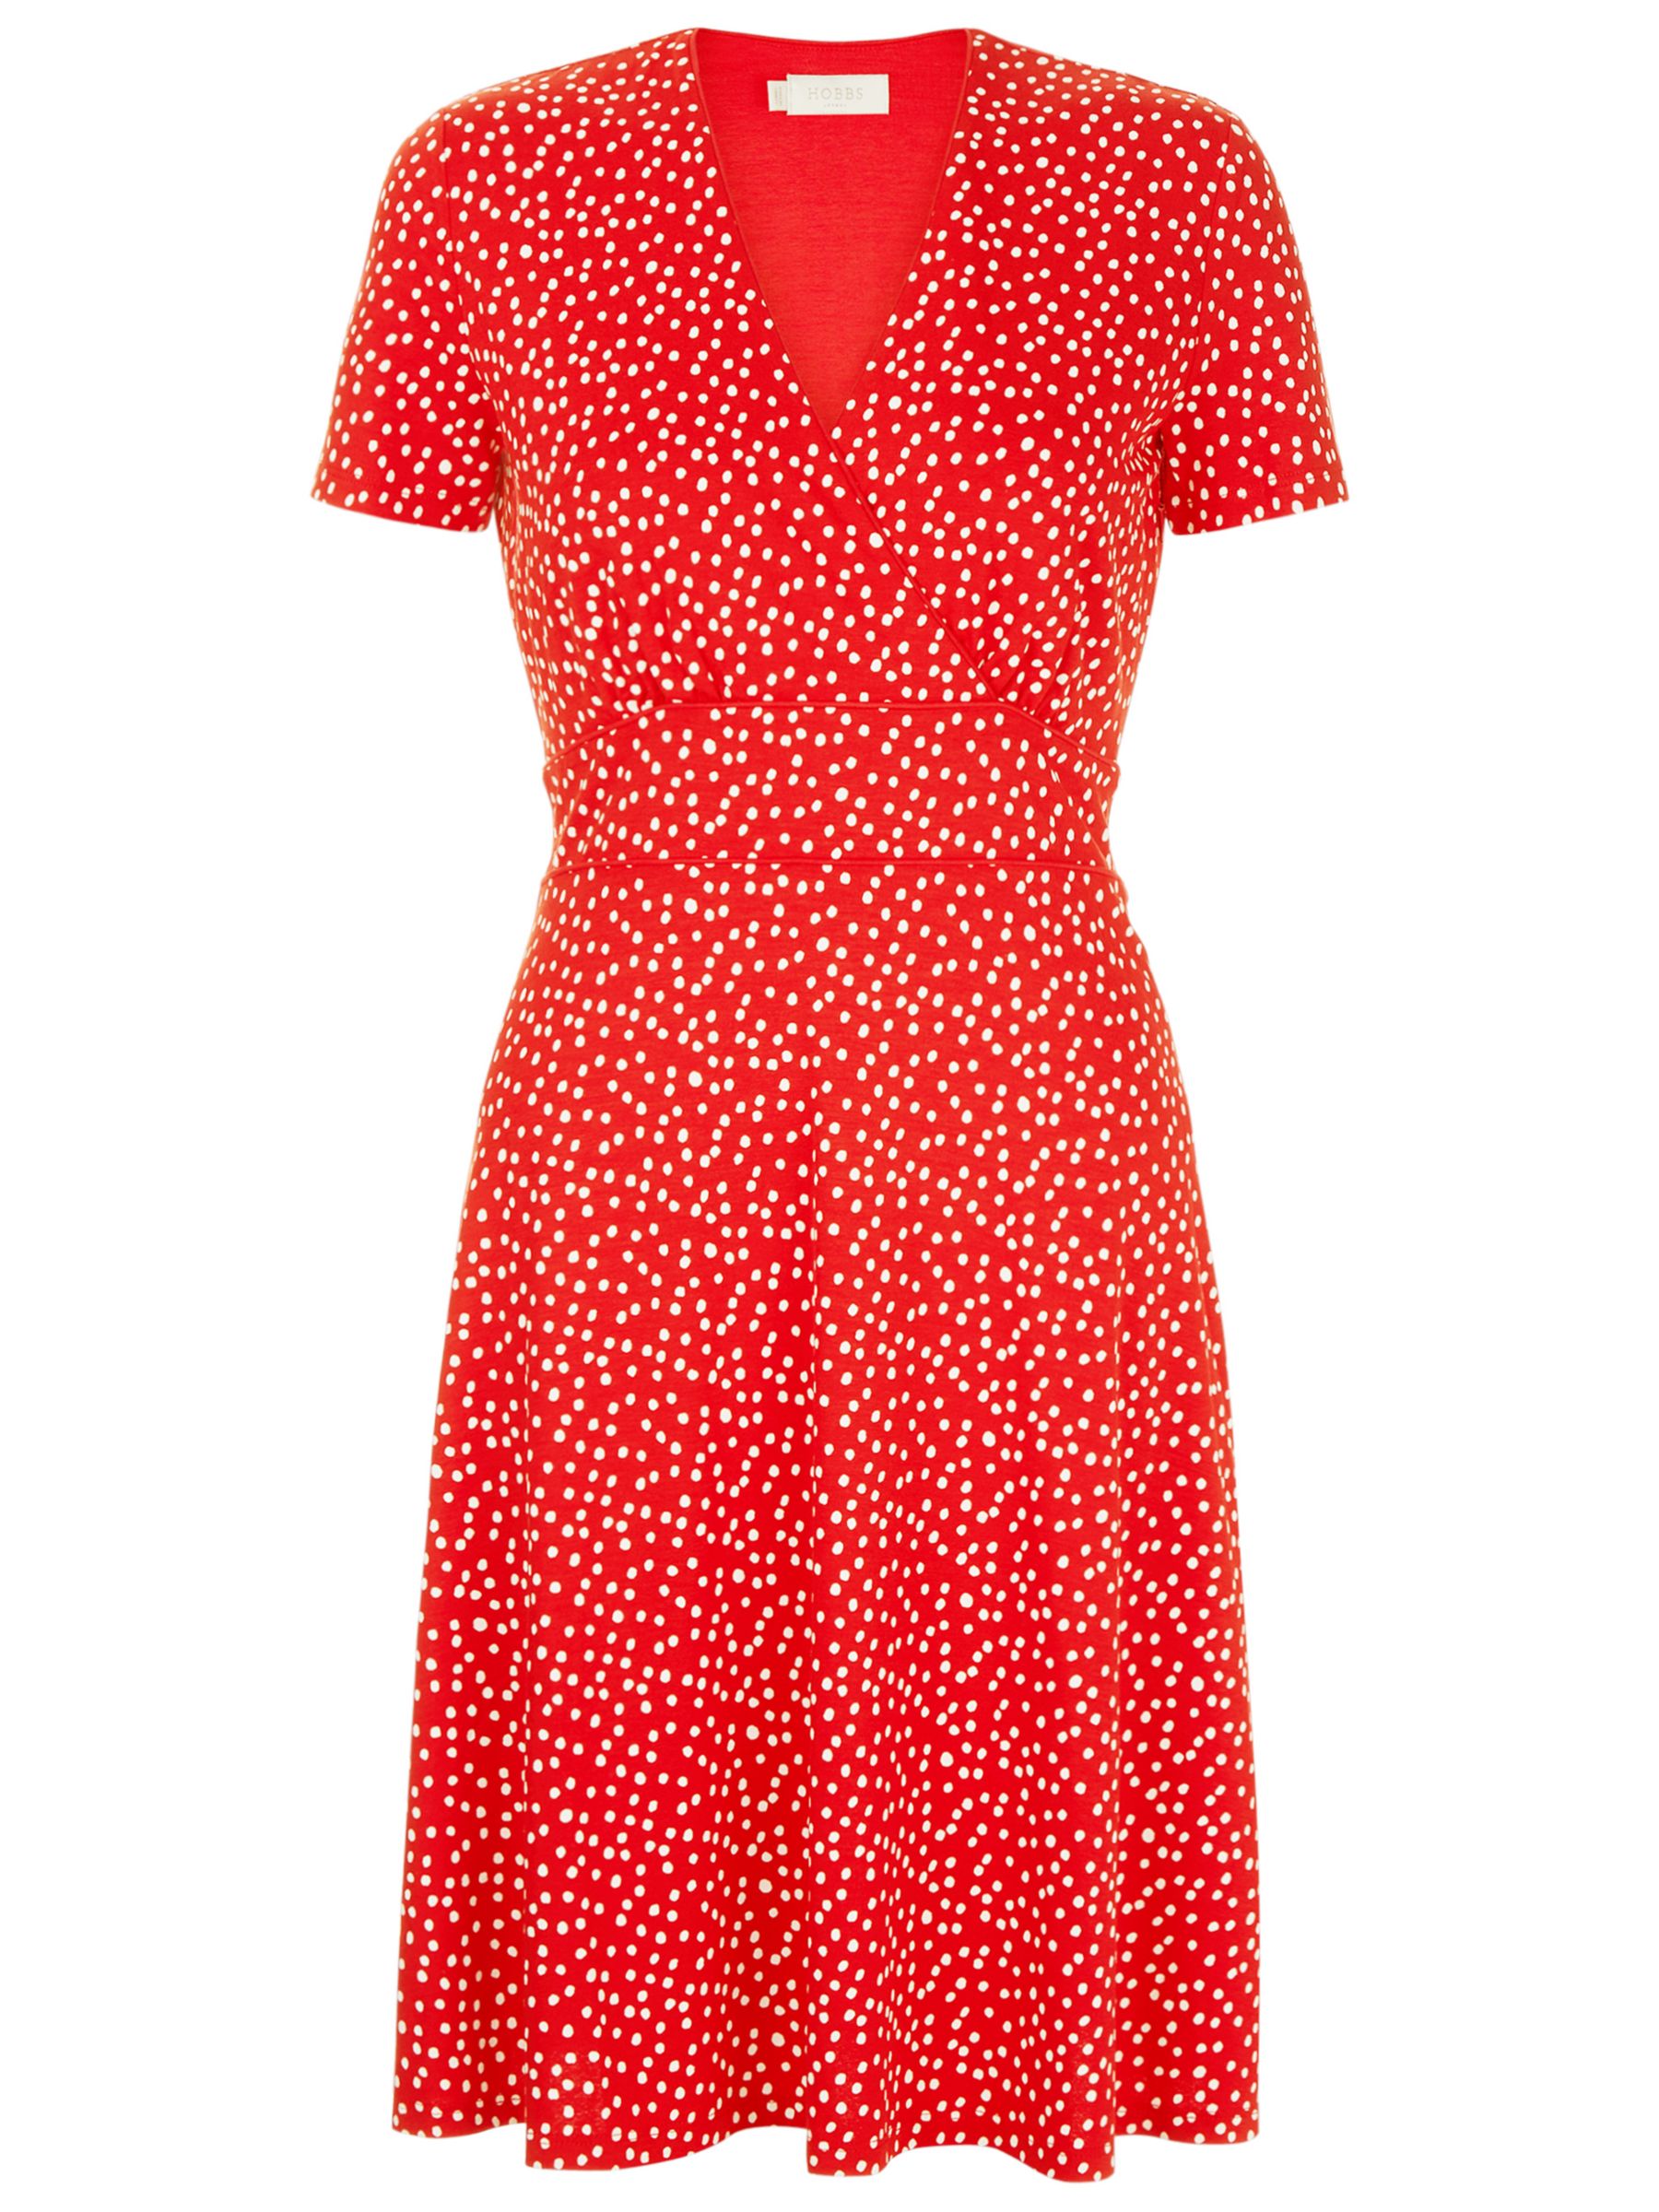 Hobbs Darcie Polka Dot Print Dress, Red/White at John Lewis & Partners